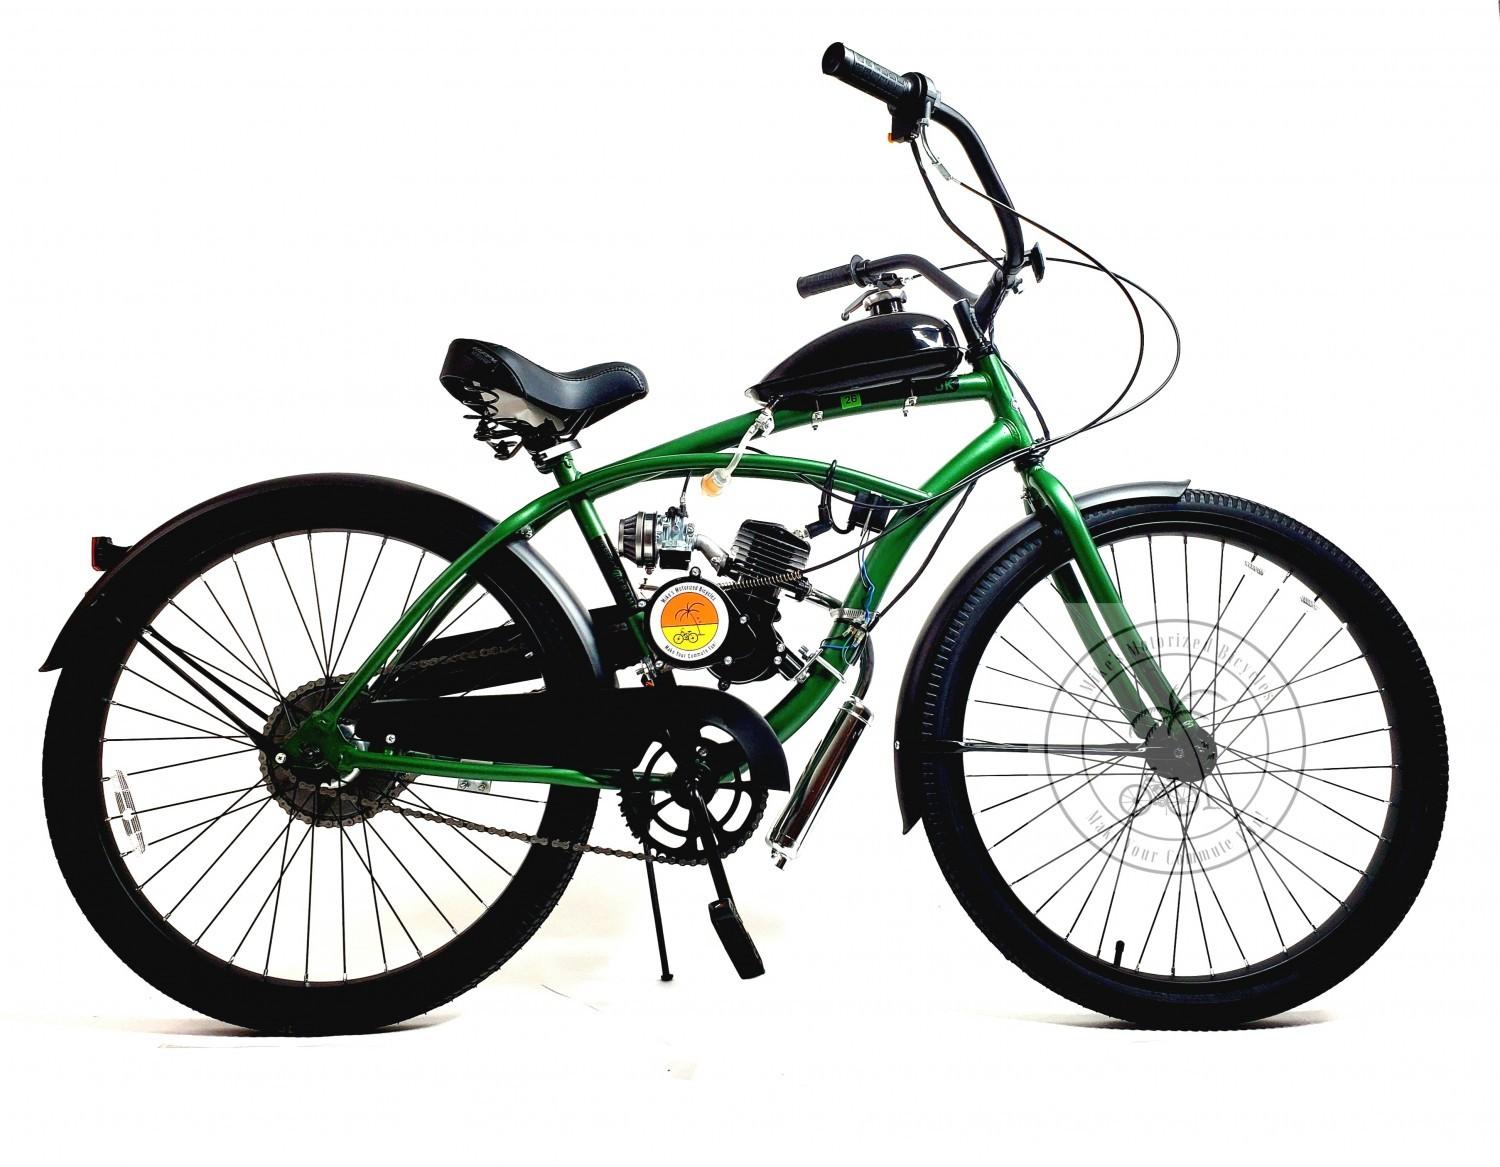 McLemore Auction Company Auction Exercise Equipment, Motorized Bikes